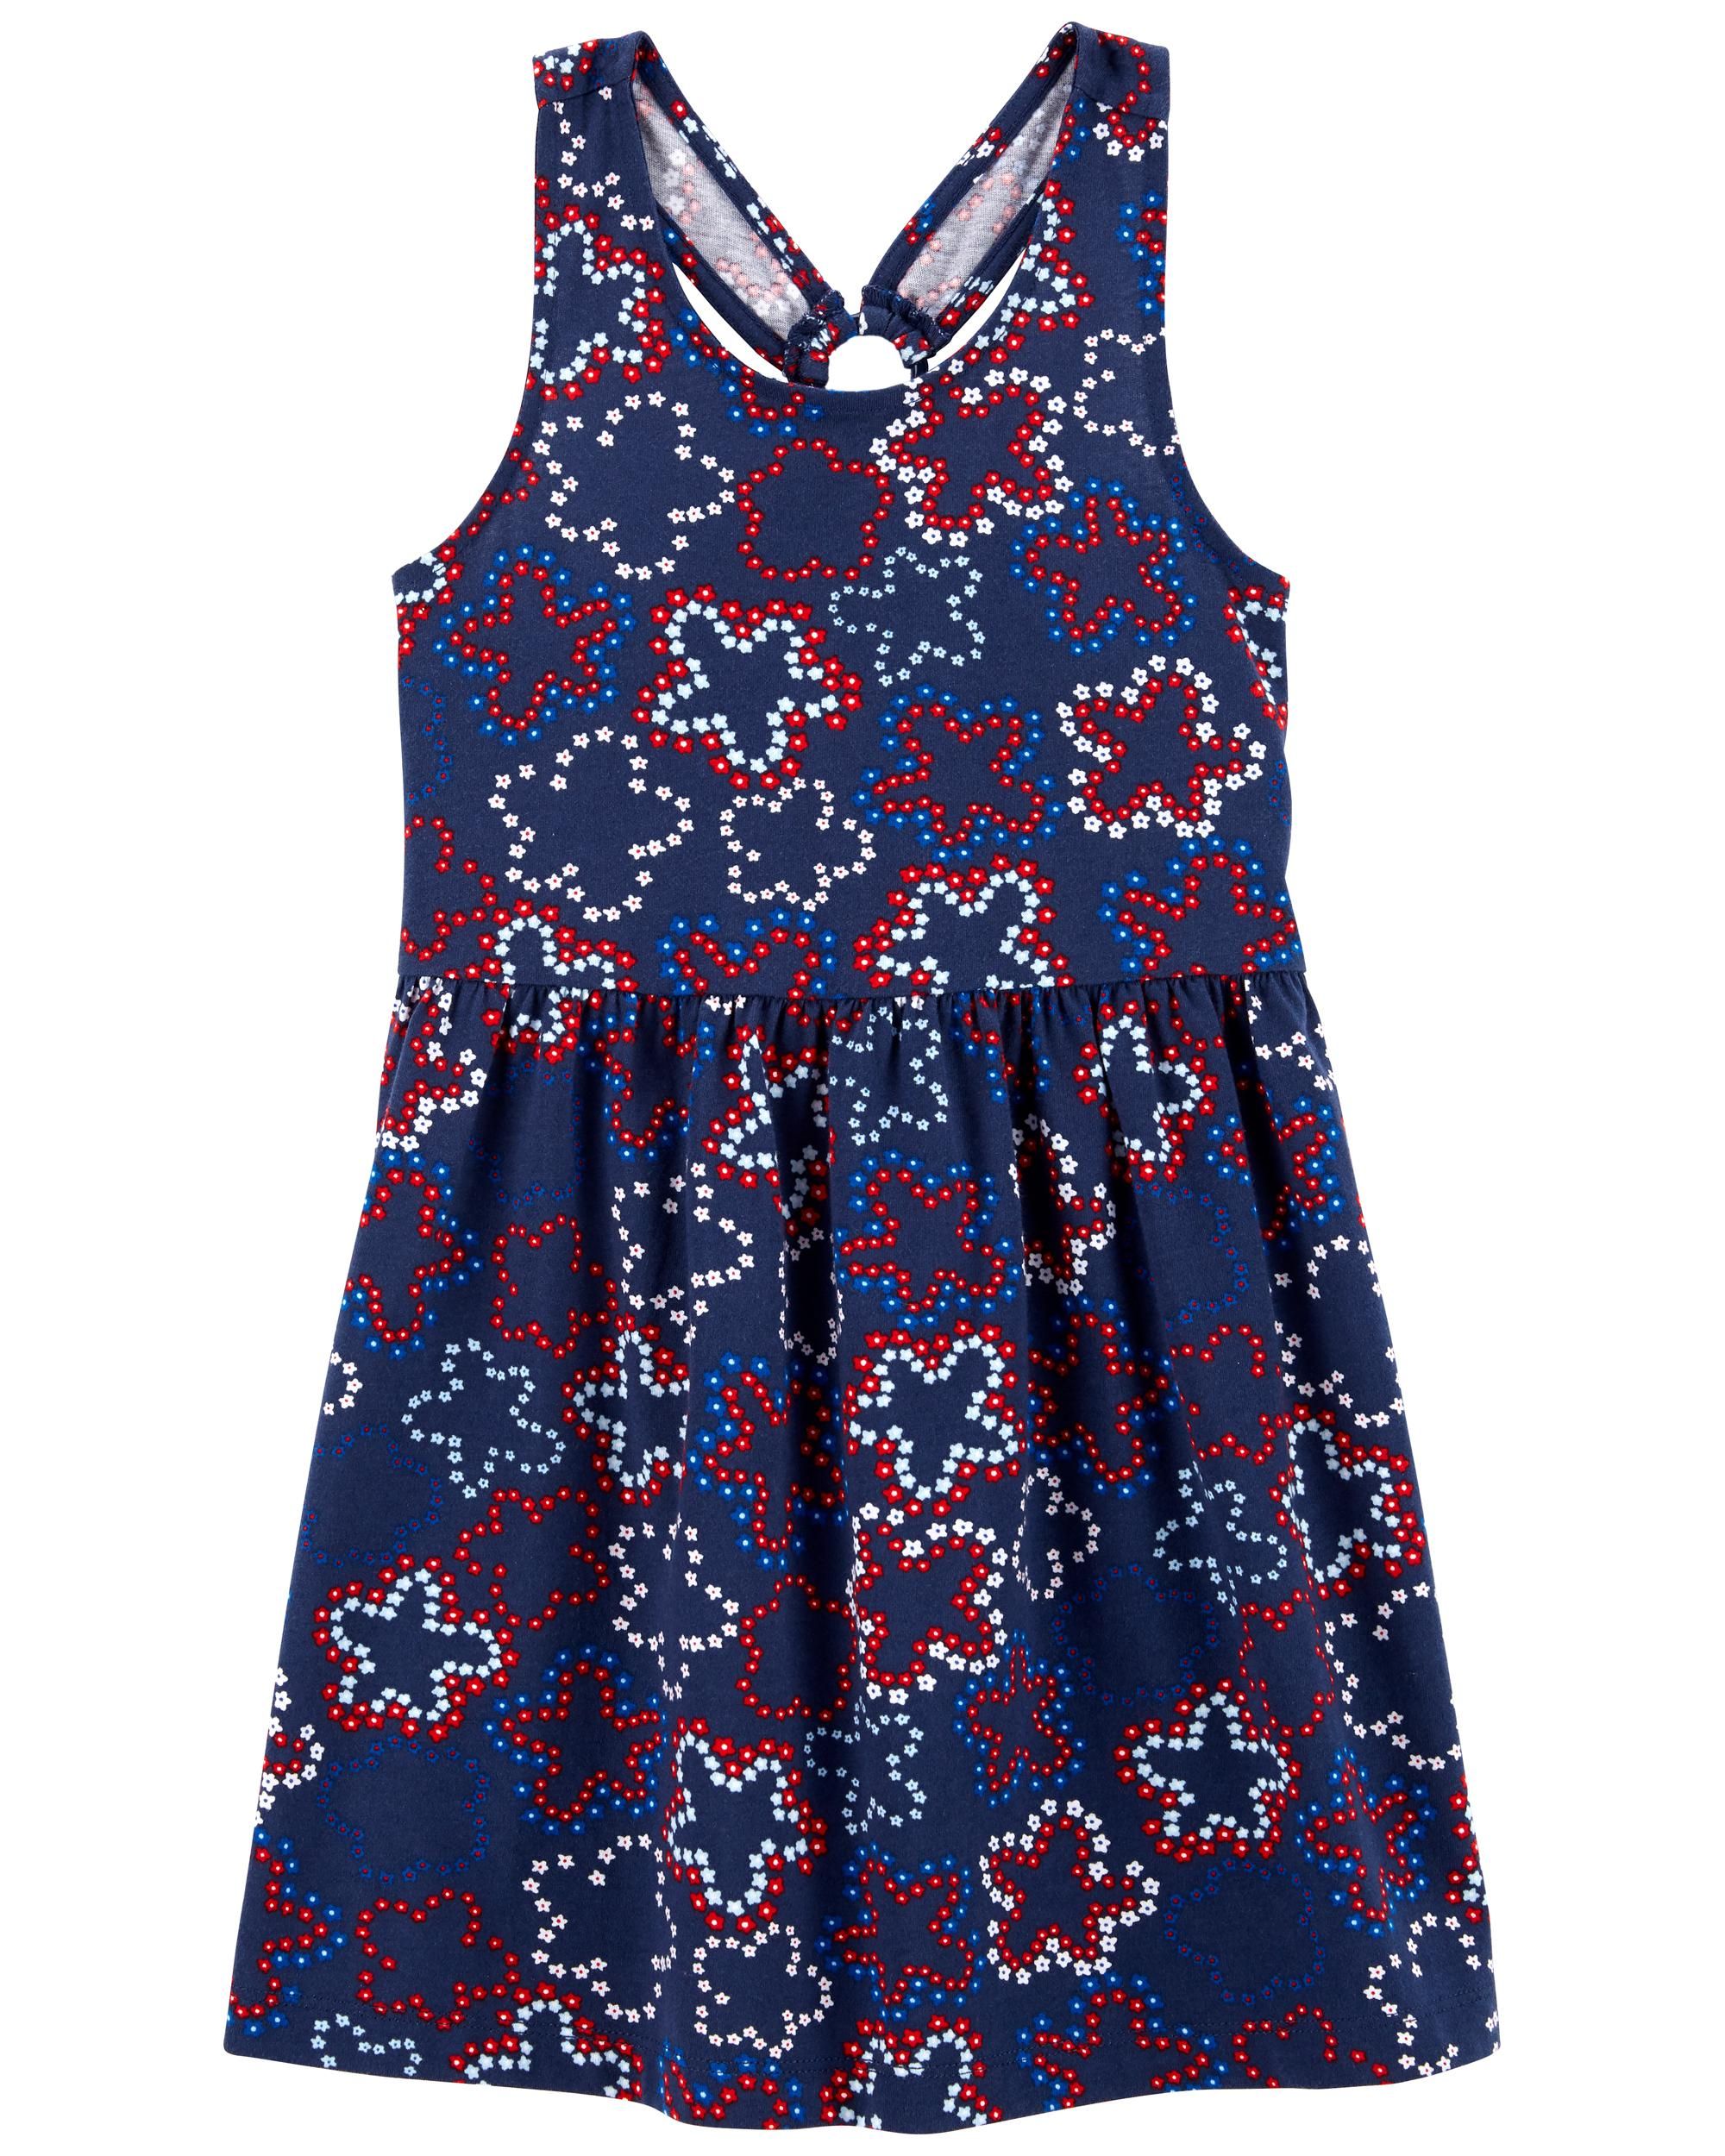 Toddler Floral Print Criss-Cross Jersey Dress | Carter's